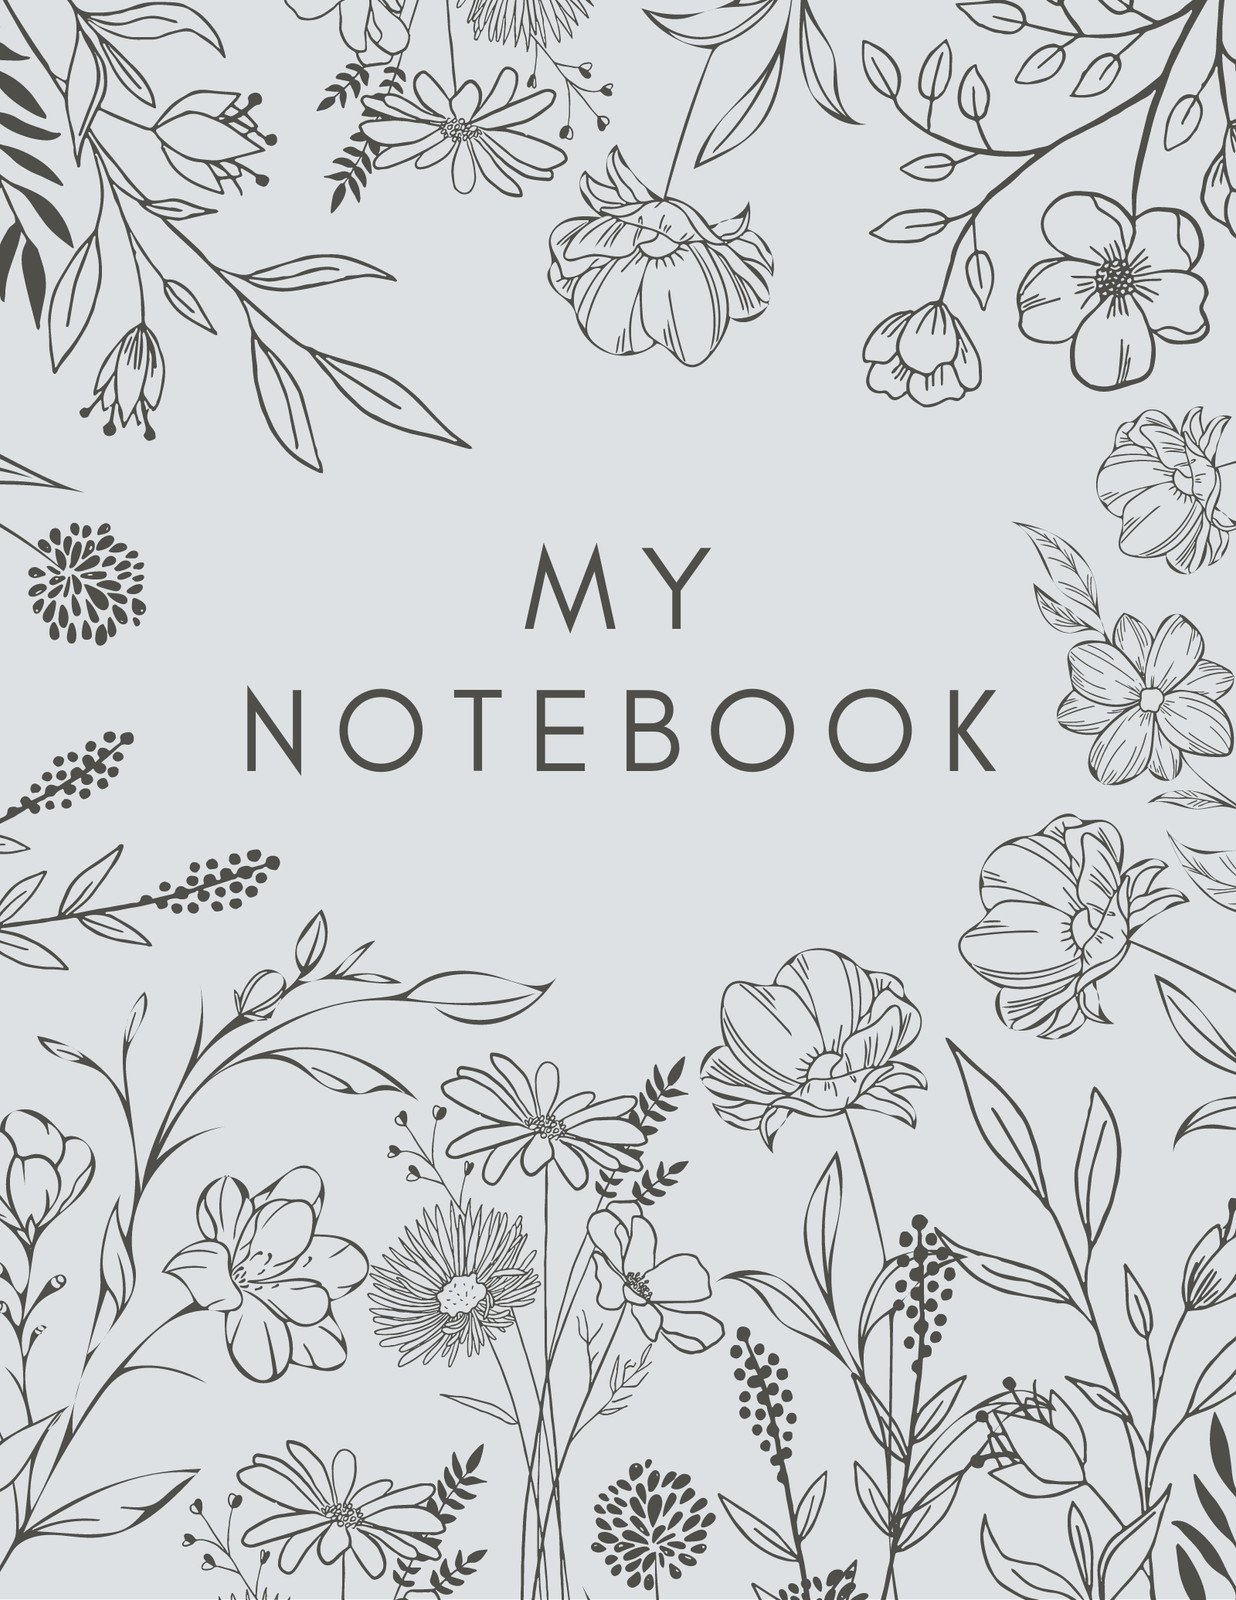 Customized sketchbook cover inspo